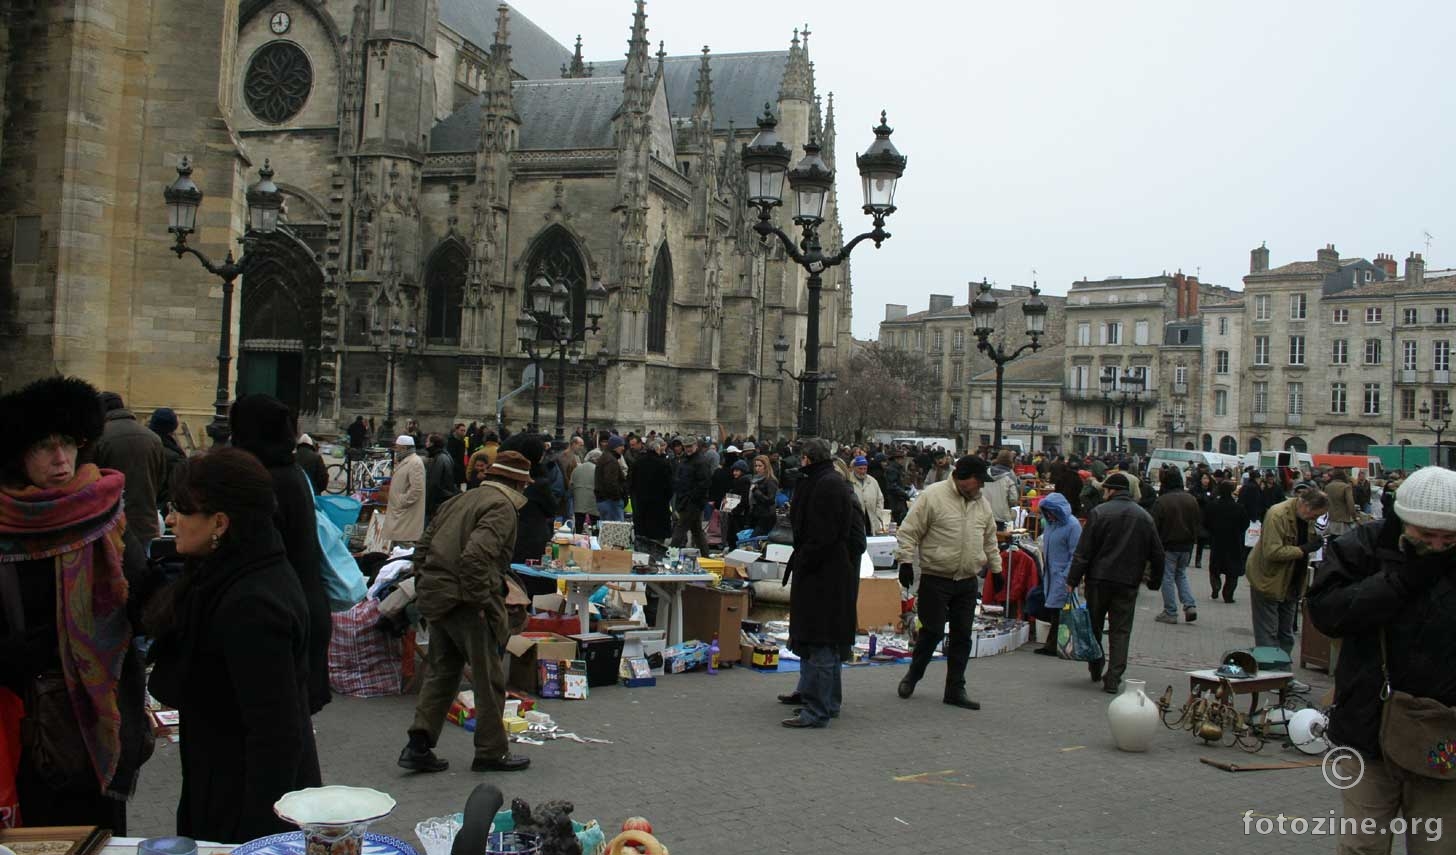 St Michel market